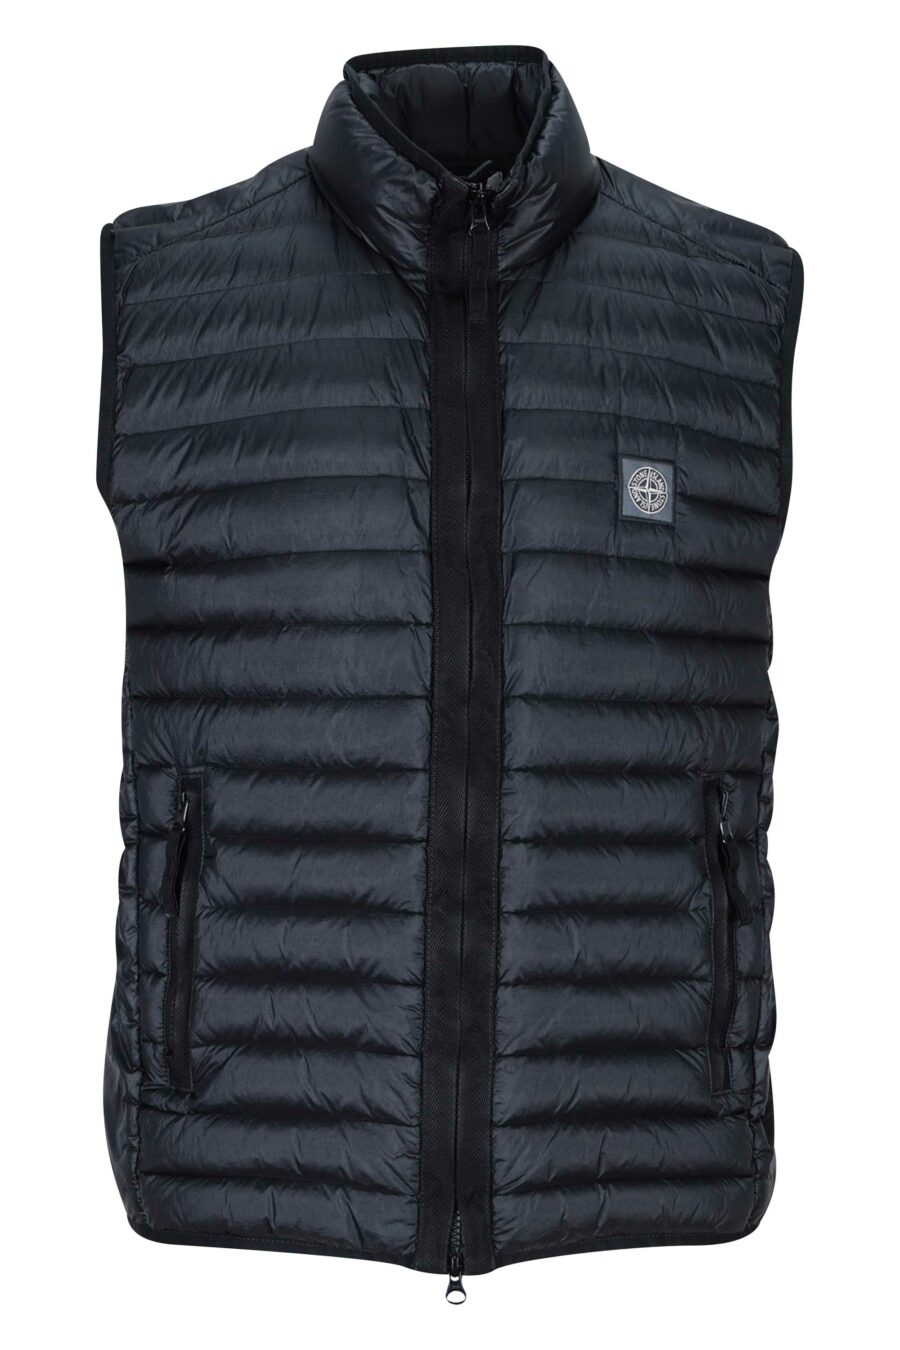 Black waistcoat with square mini-logo - 8052572724831